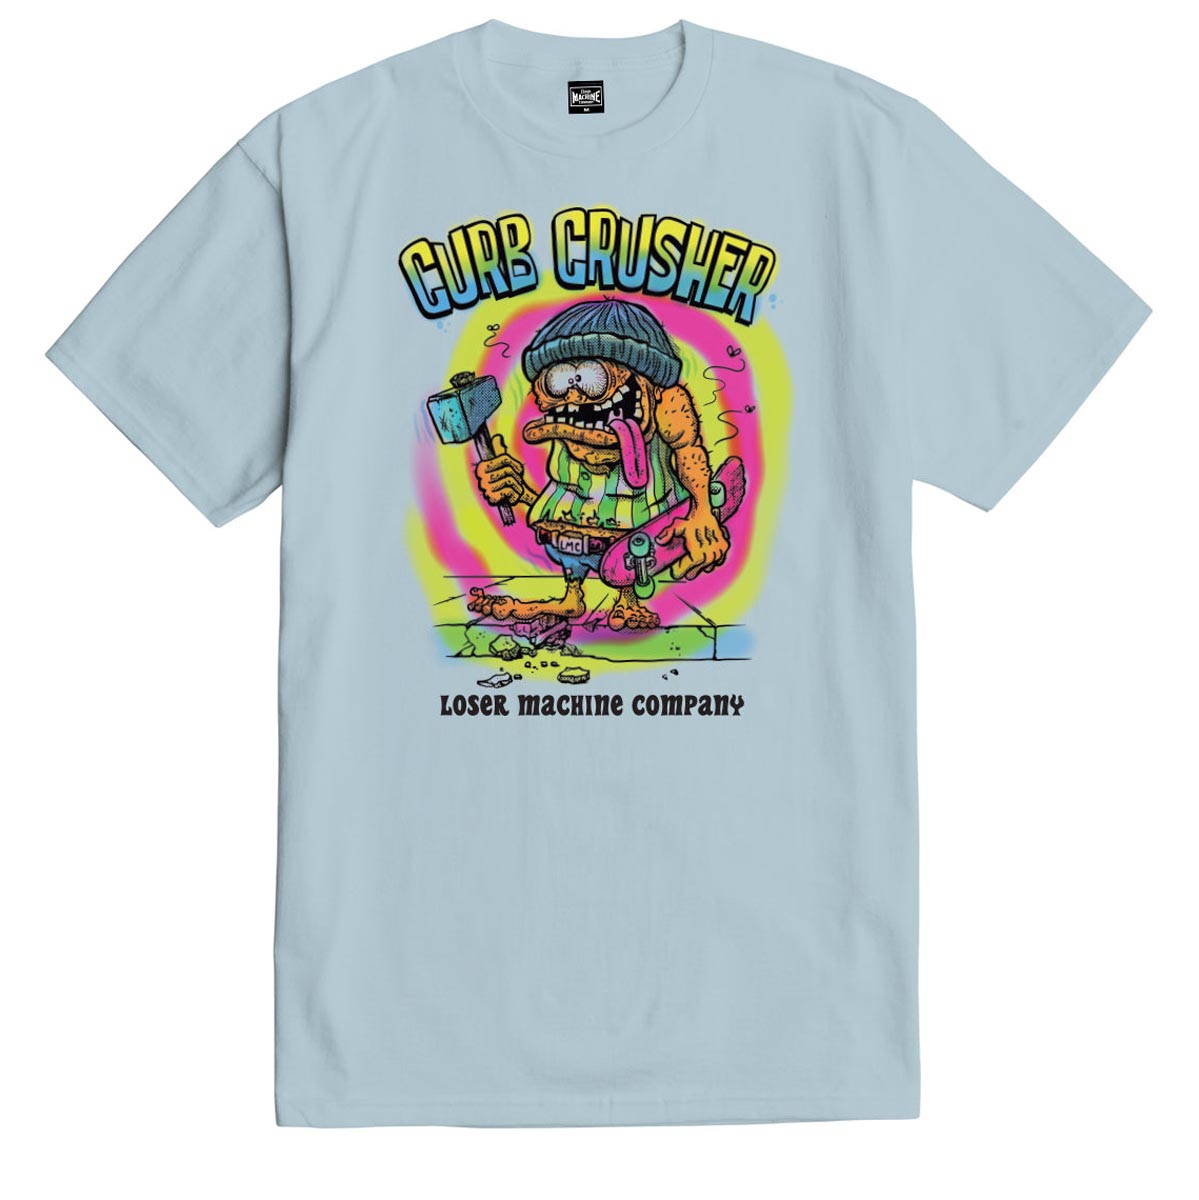 Loser Machine Curb Crusher T-Shirt - Light Blue image 1